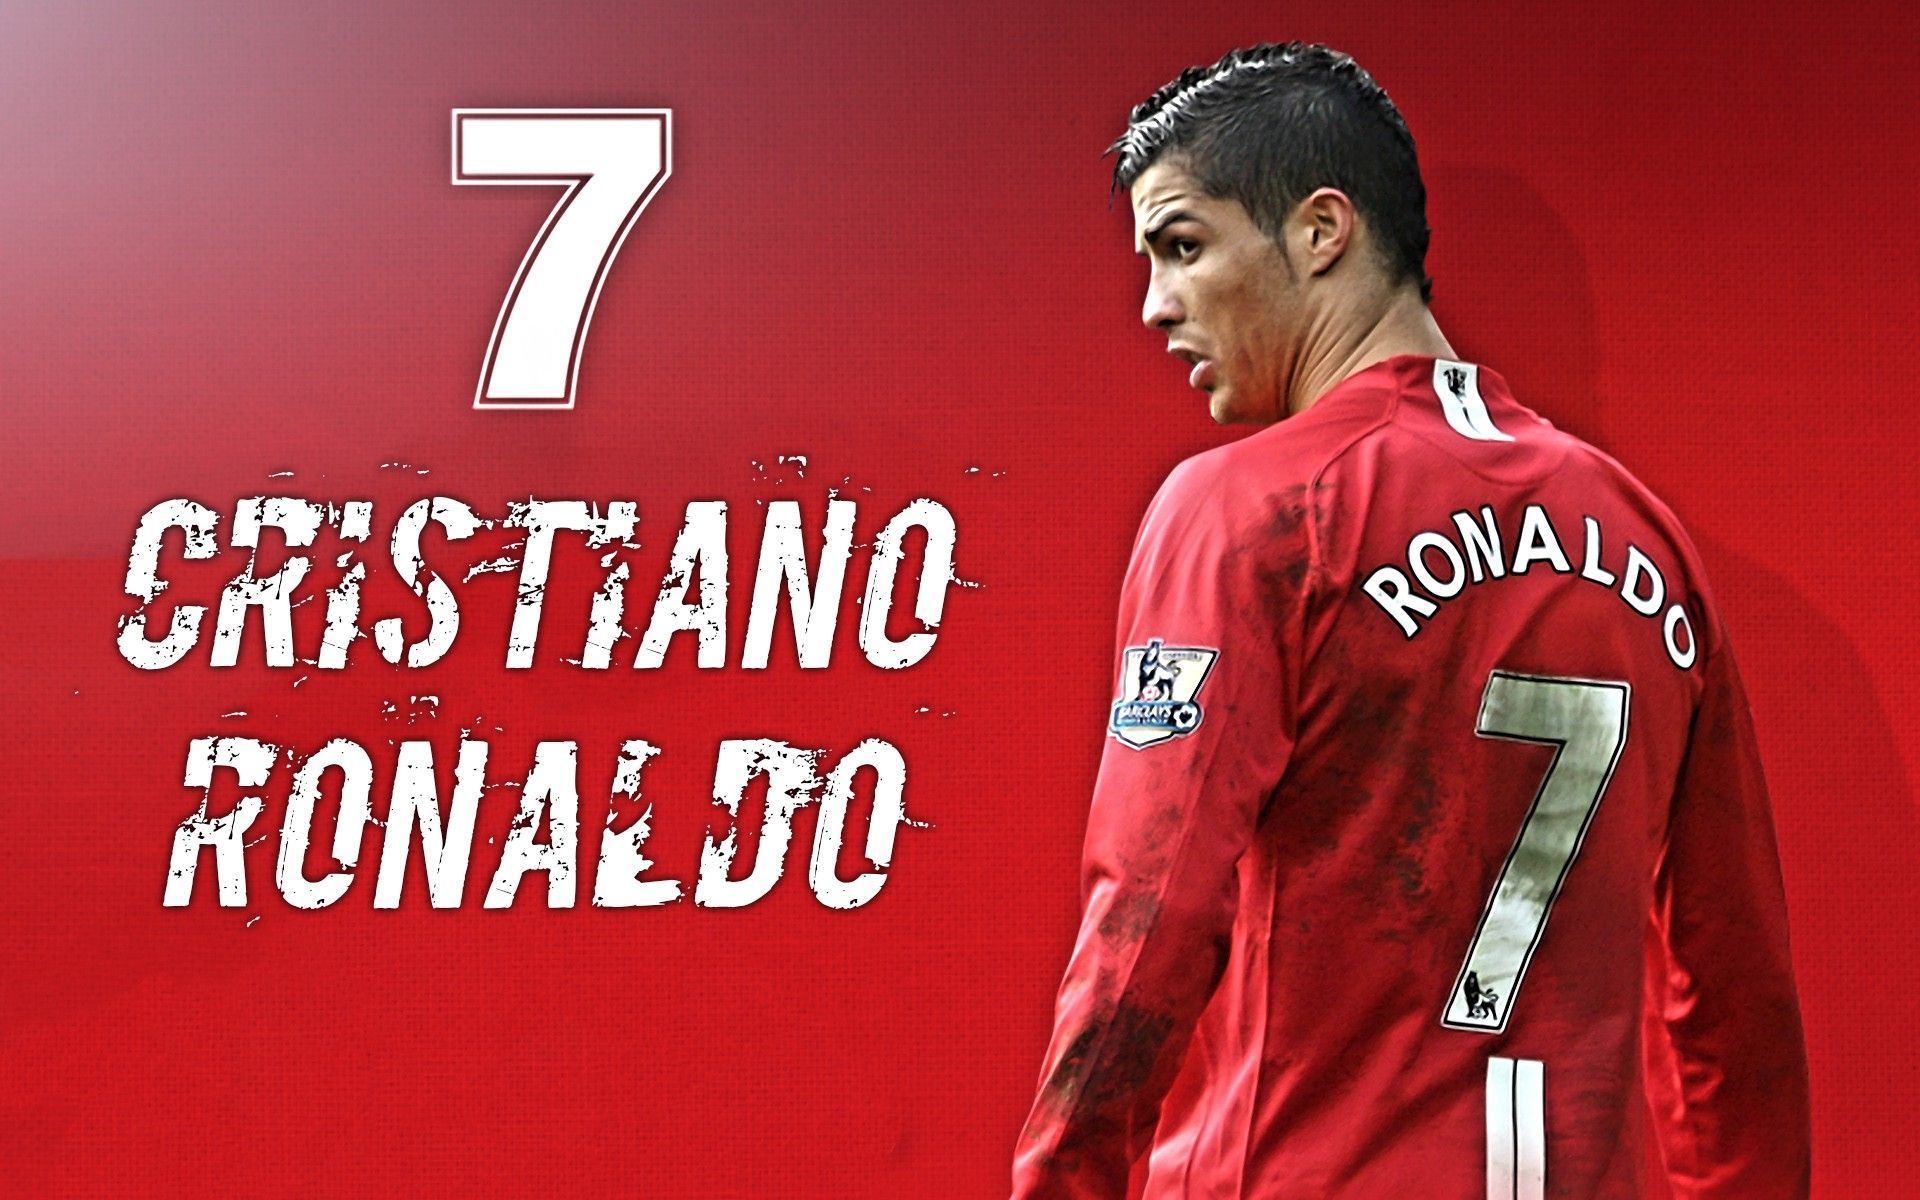 Ronaldo Man Utd Jersey